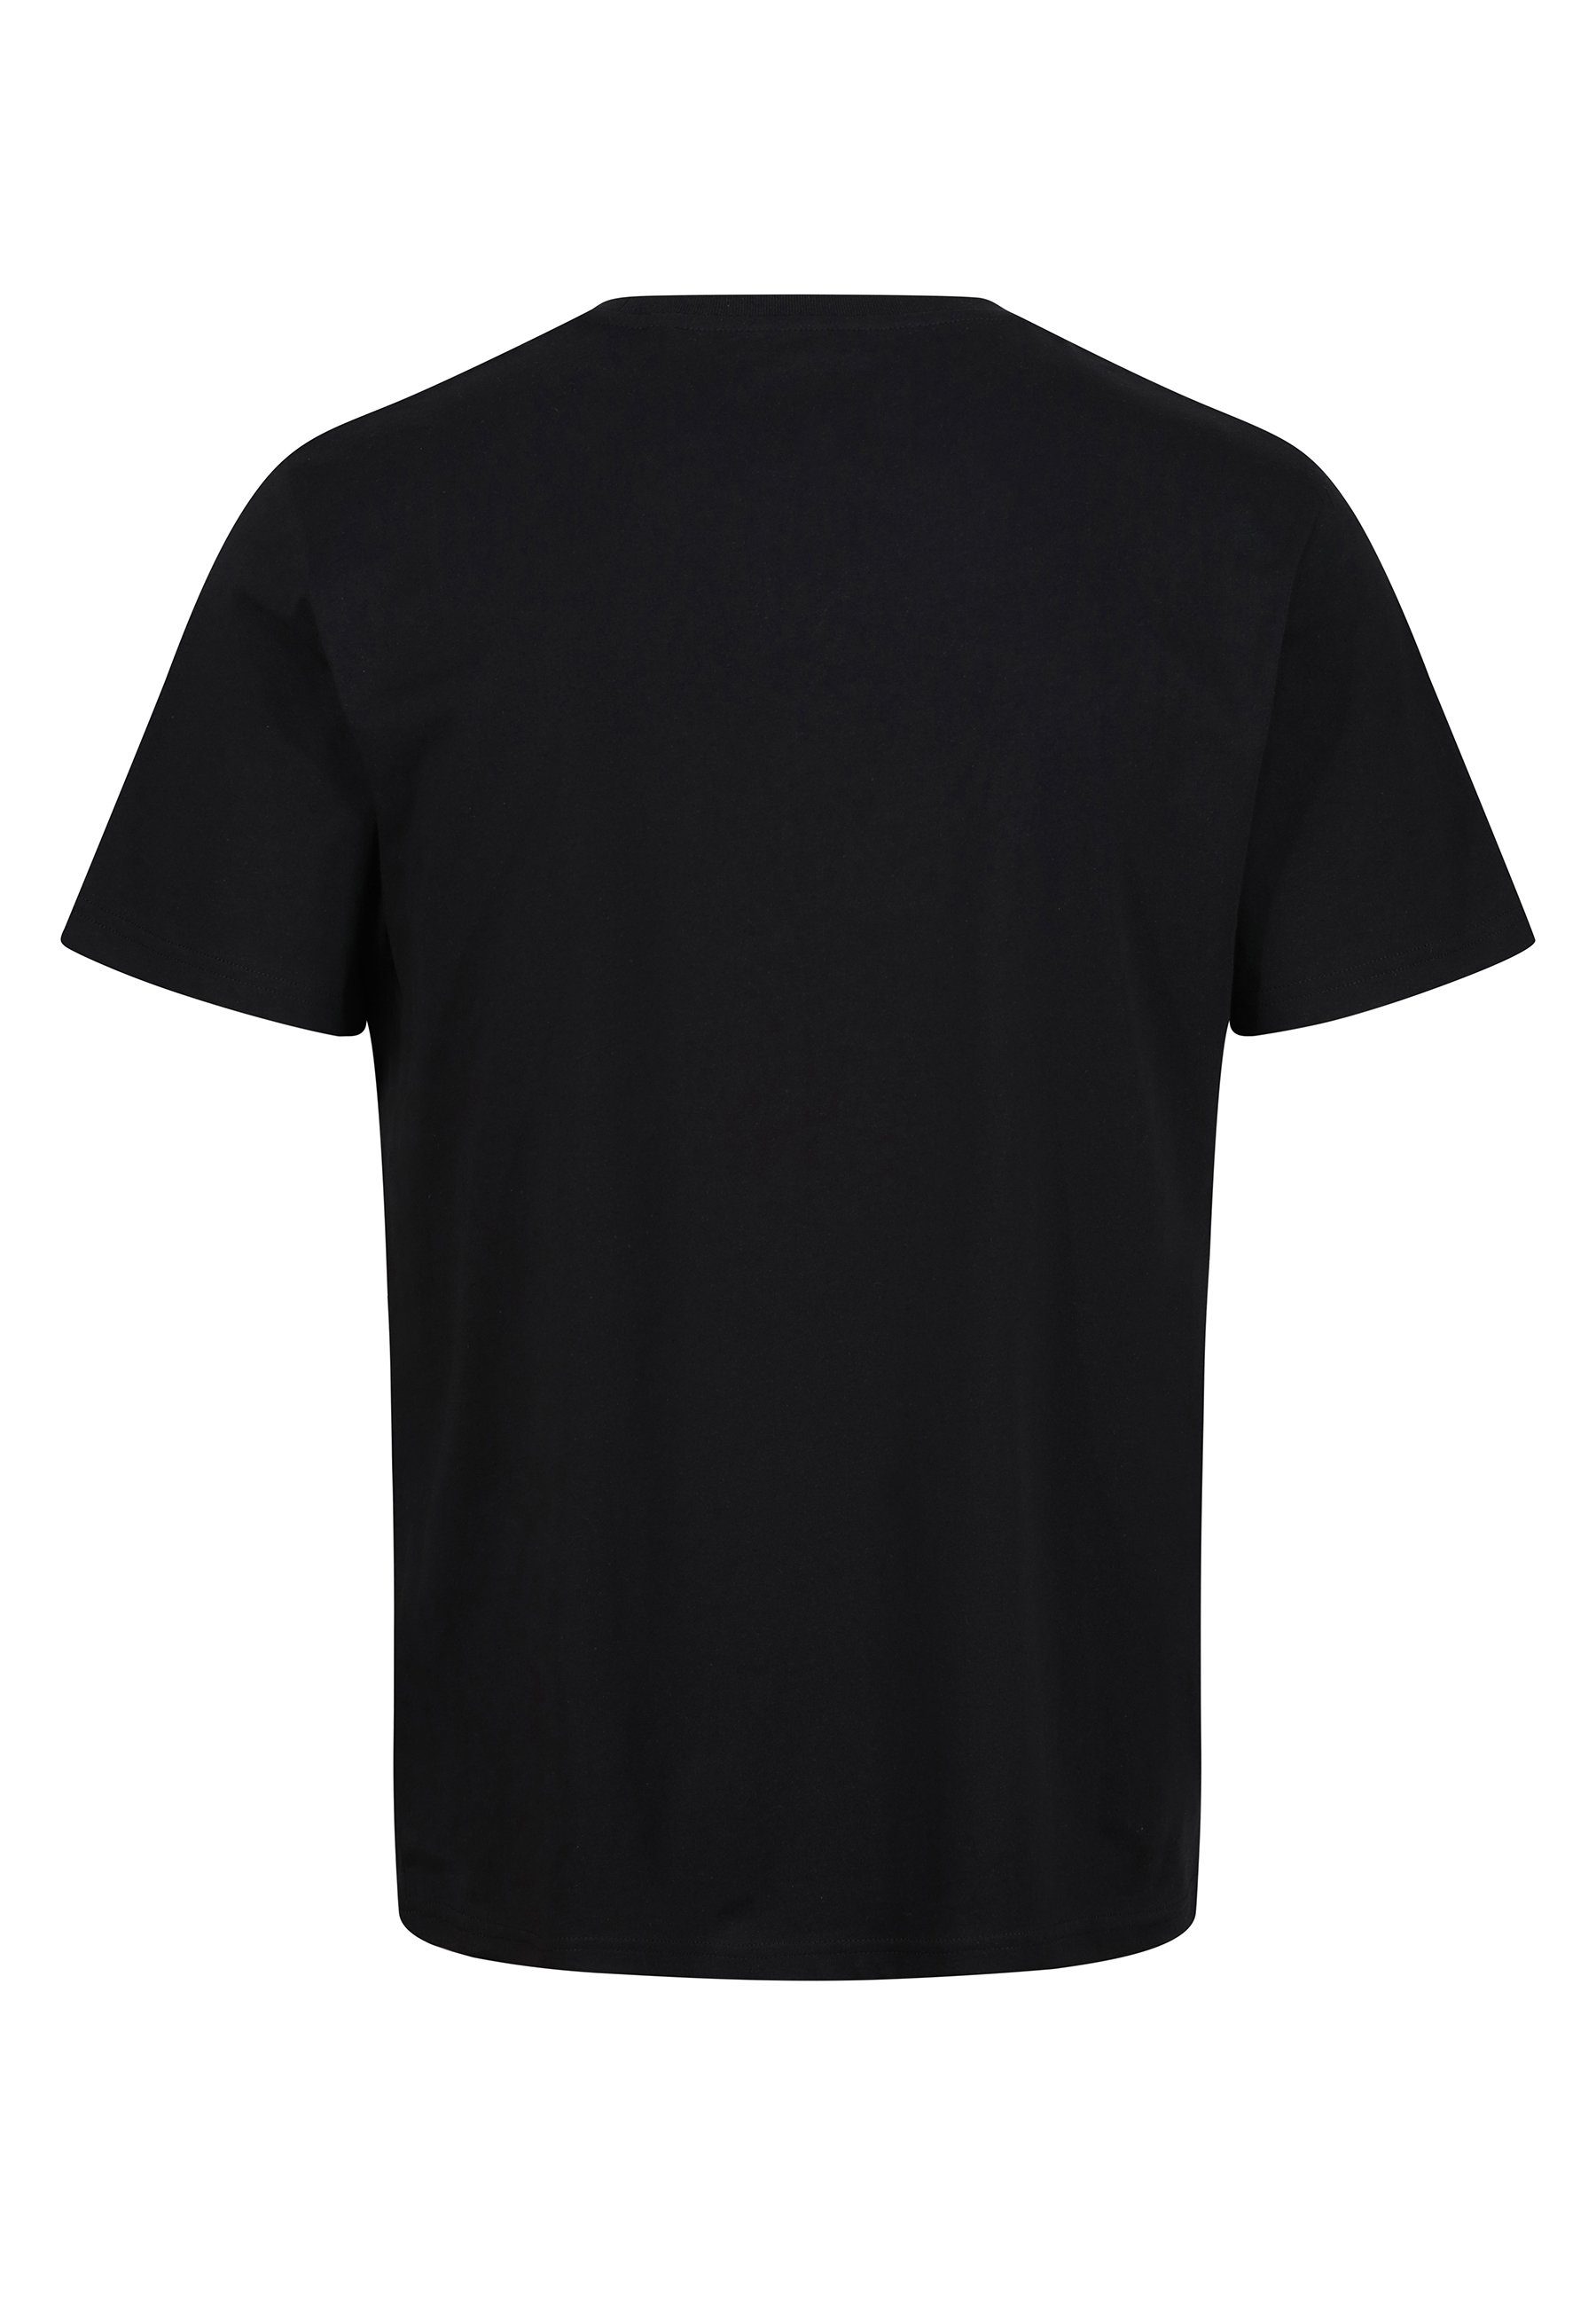 zertifizierte T-Shirt Recovered NFL Bio-Baumwolle LOGO GOTS RAMS